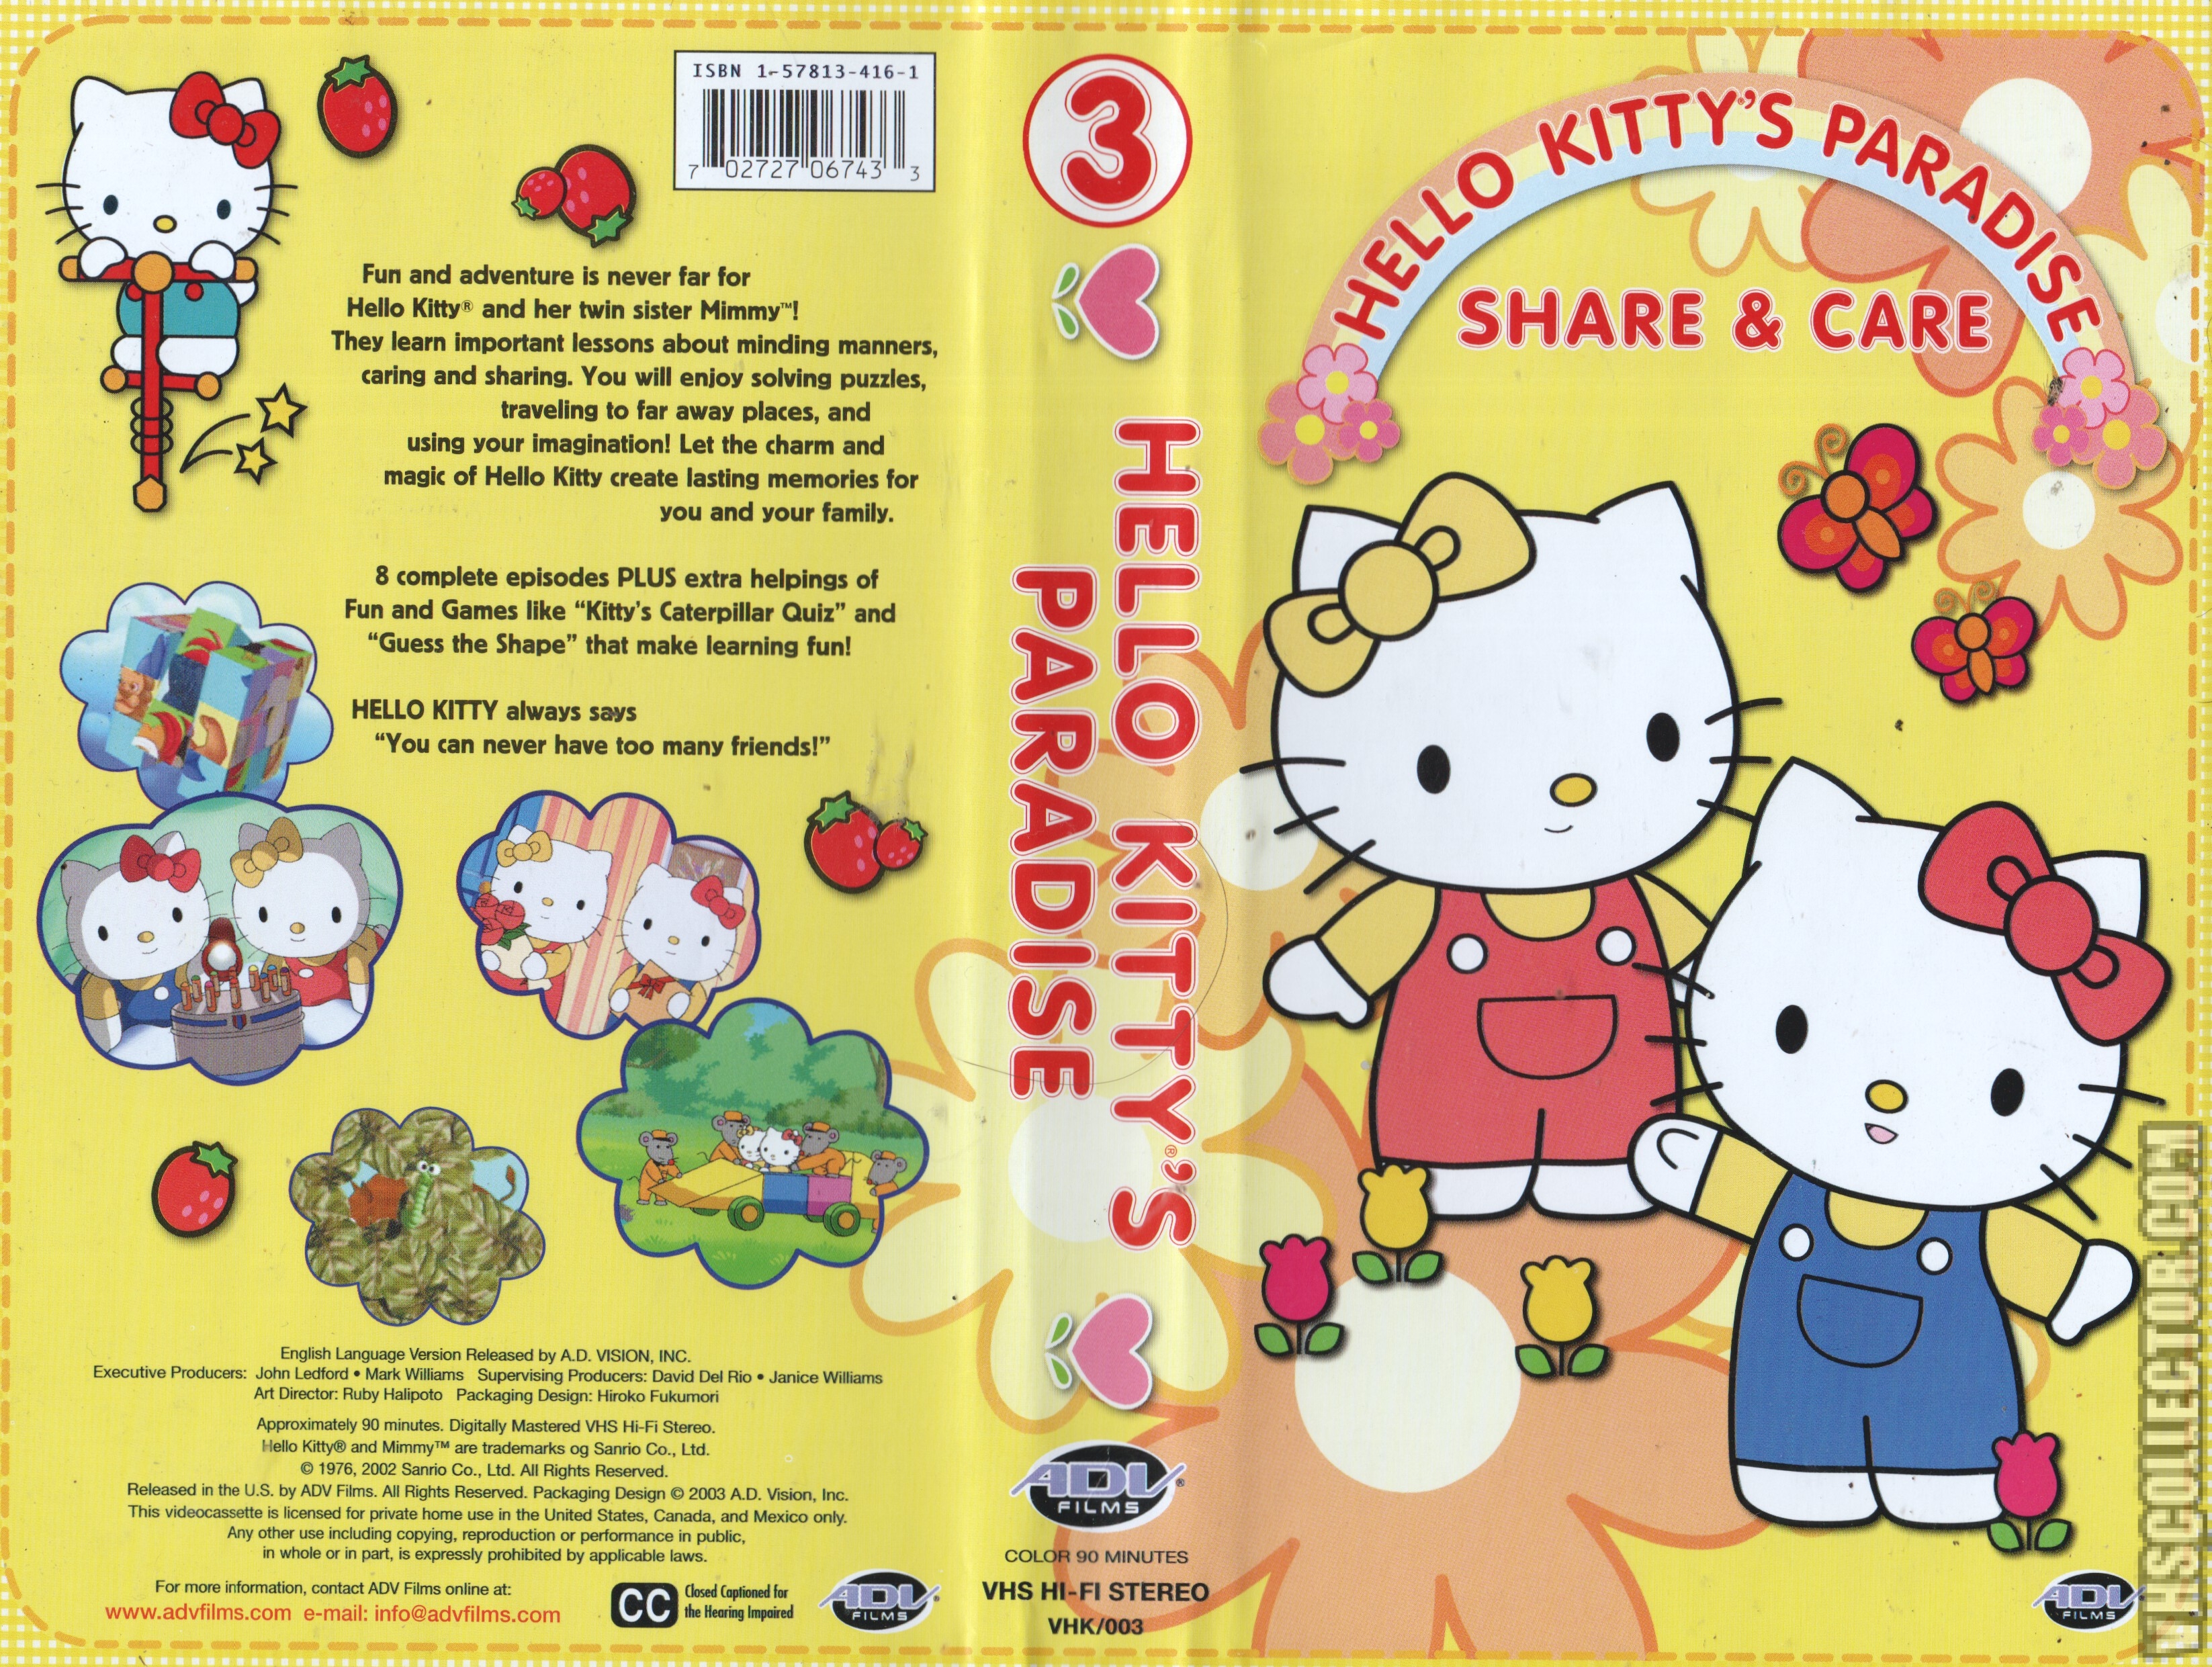  Hello  Kitty  s Paradise Volume 3 Share Care 